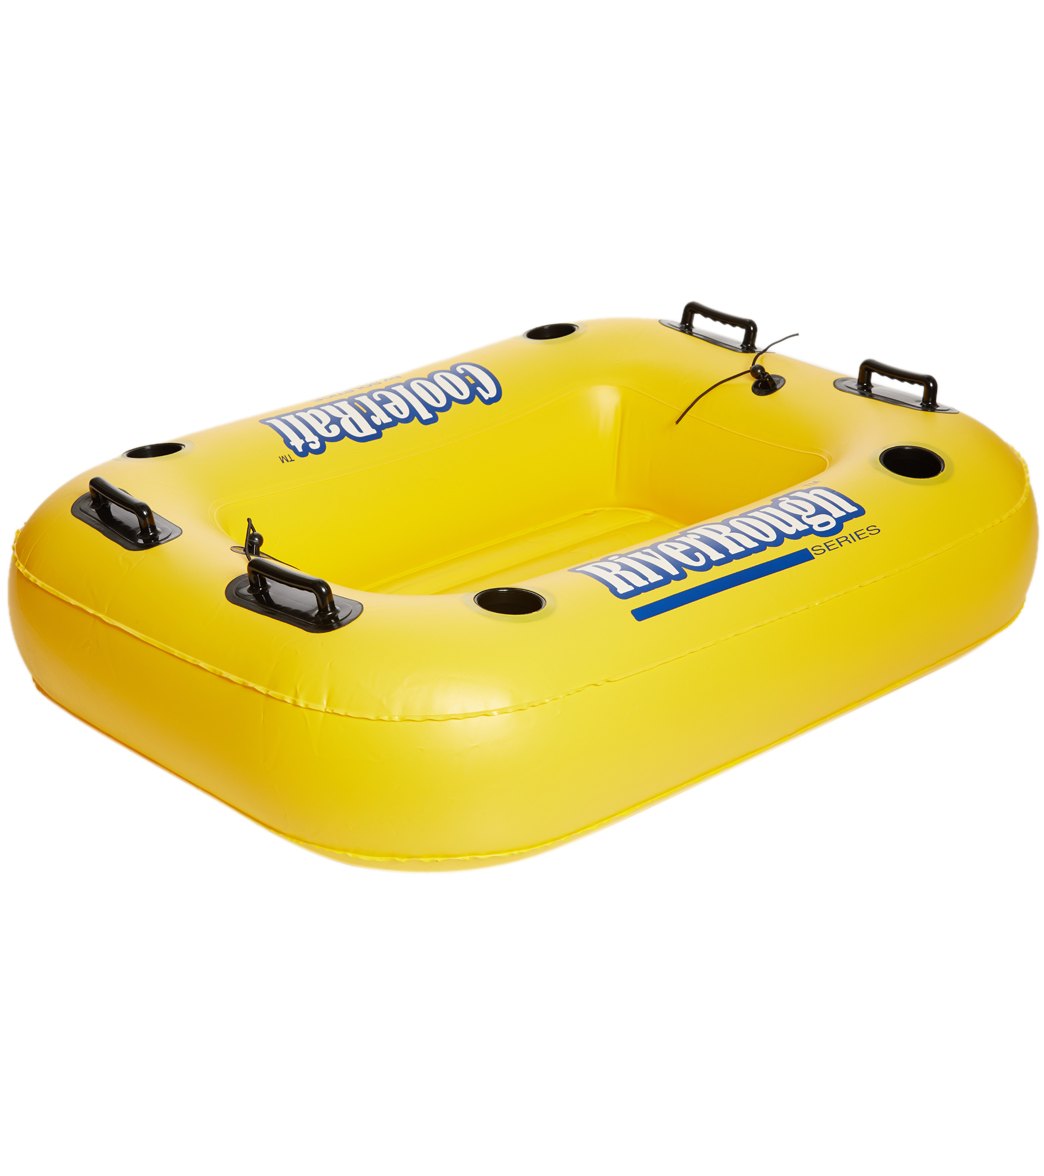 Swimline Solstice Riverrough Cooler Raft - Yellow - Swimoutlet.com